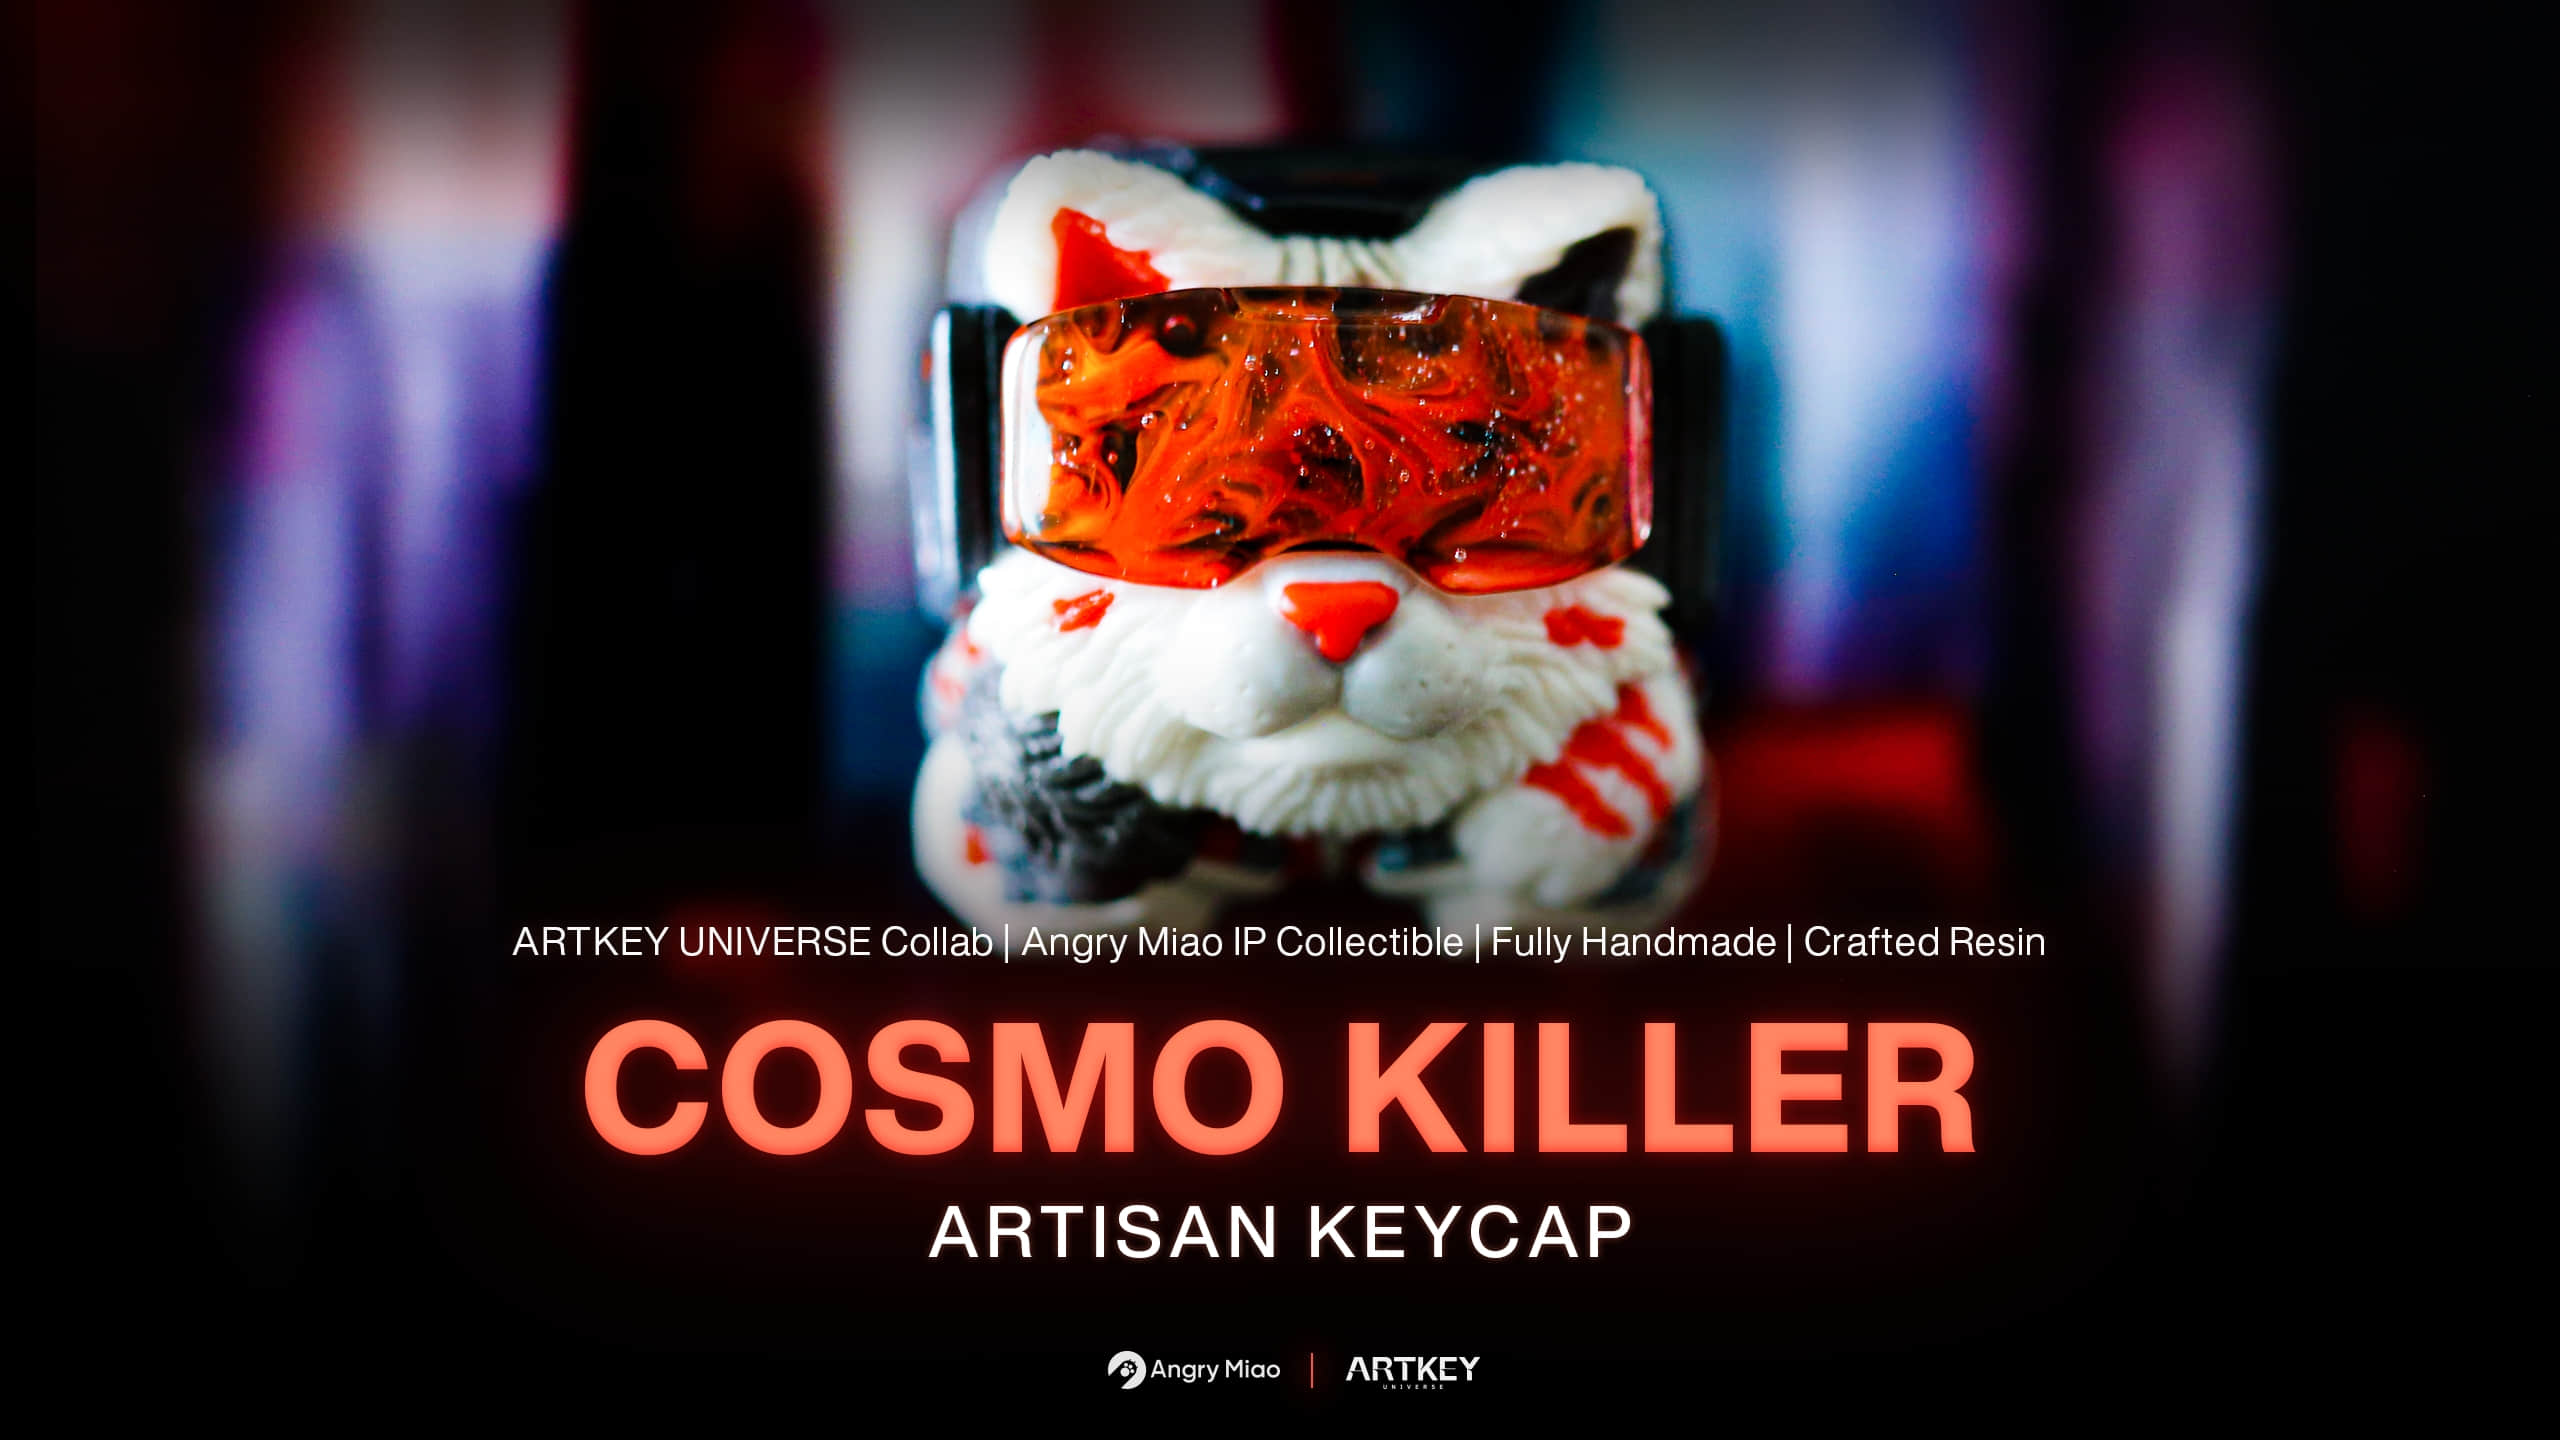 https://cdn-www.angrymiao.com/cosmo_killer/cosmo_killer_kv_mobile_en.jpg